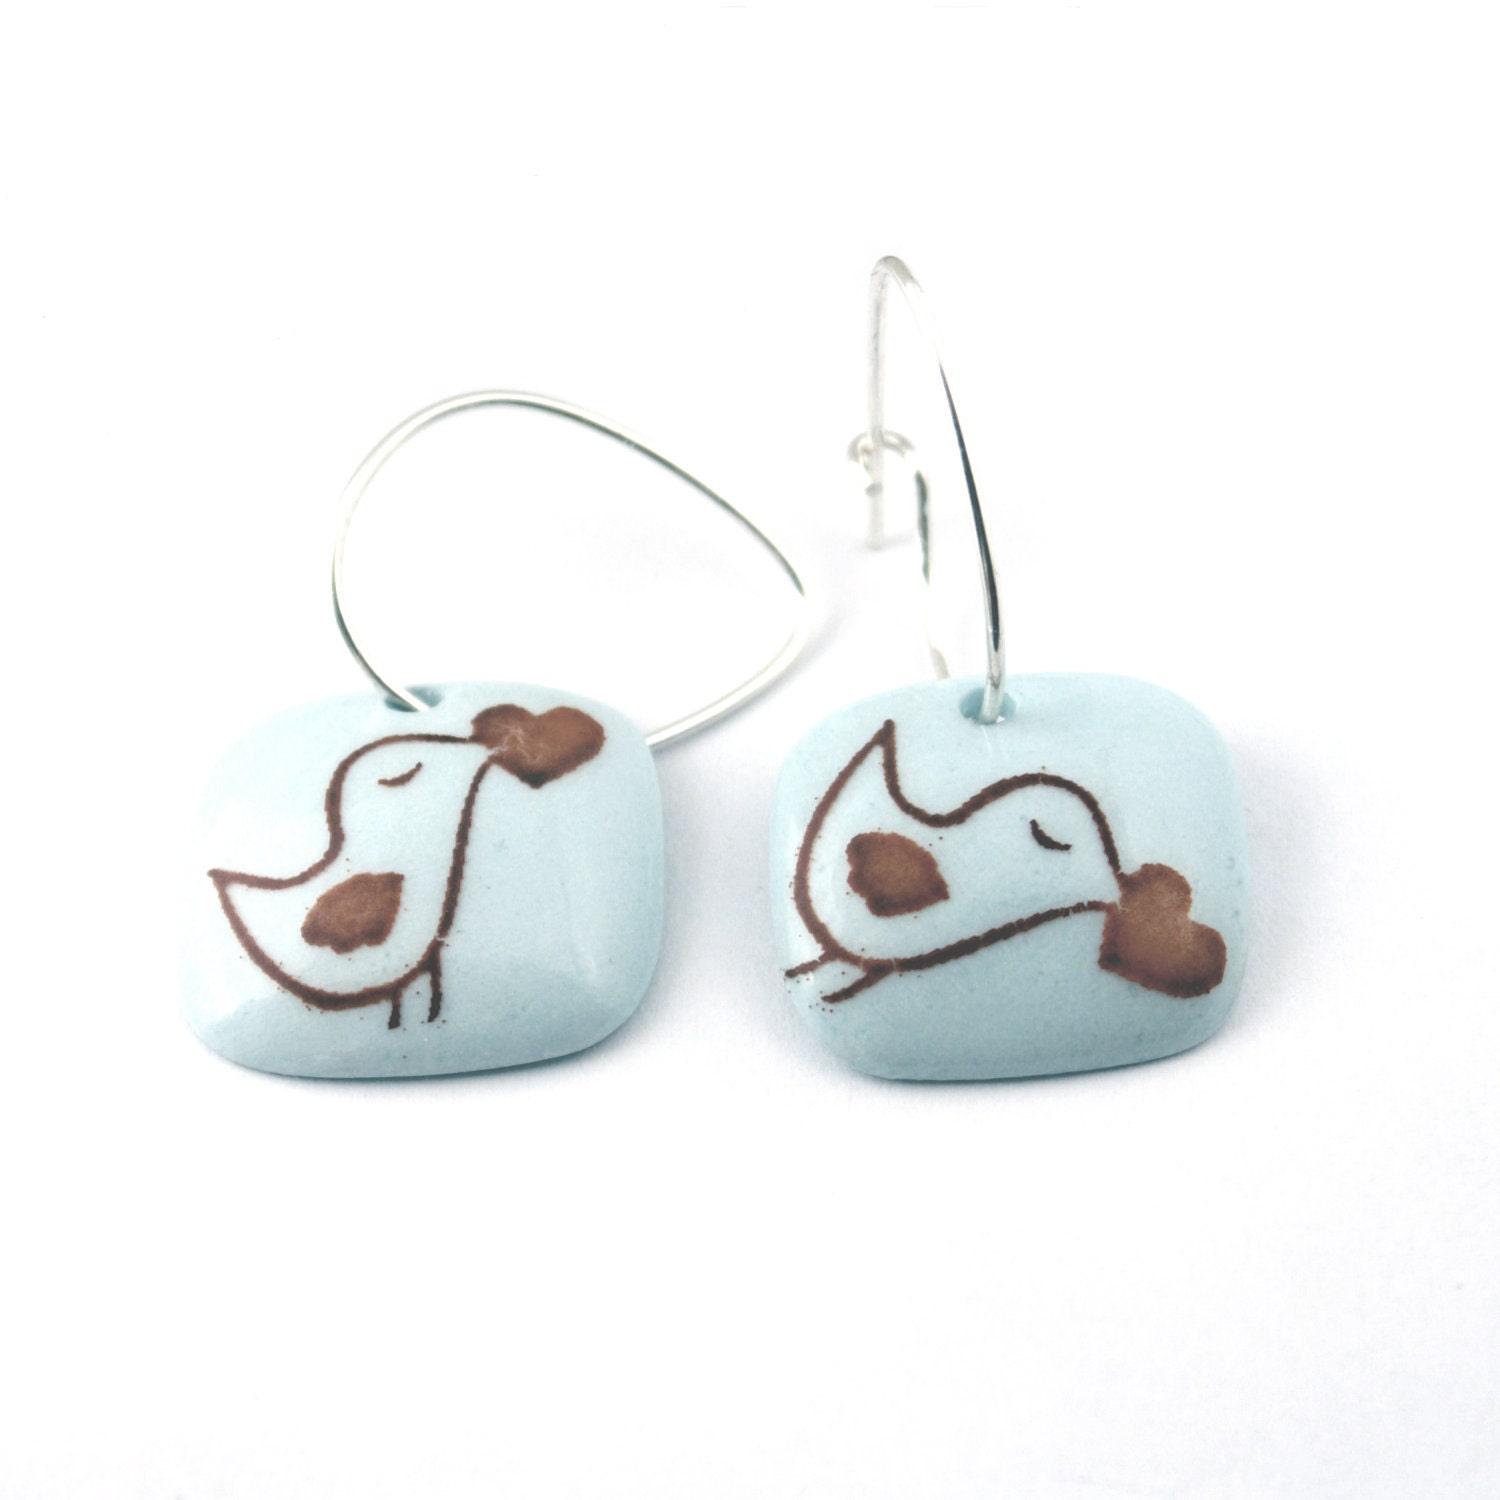 Sky Blue Earrings Birds in Love with Heart Porcelain 925 Sterling Silver Handmade Hoops Romantic